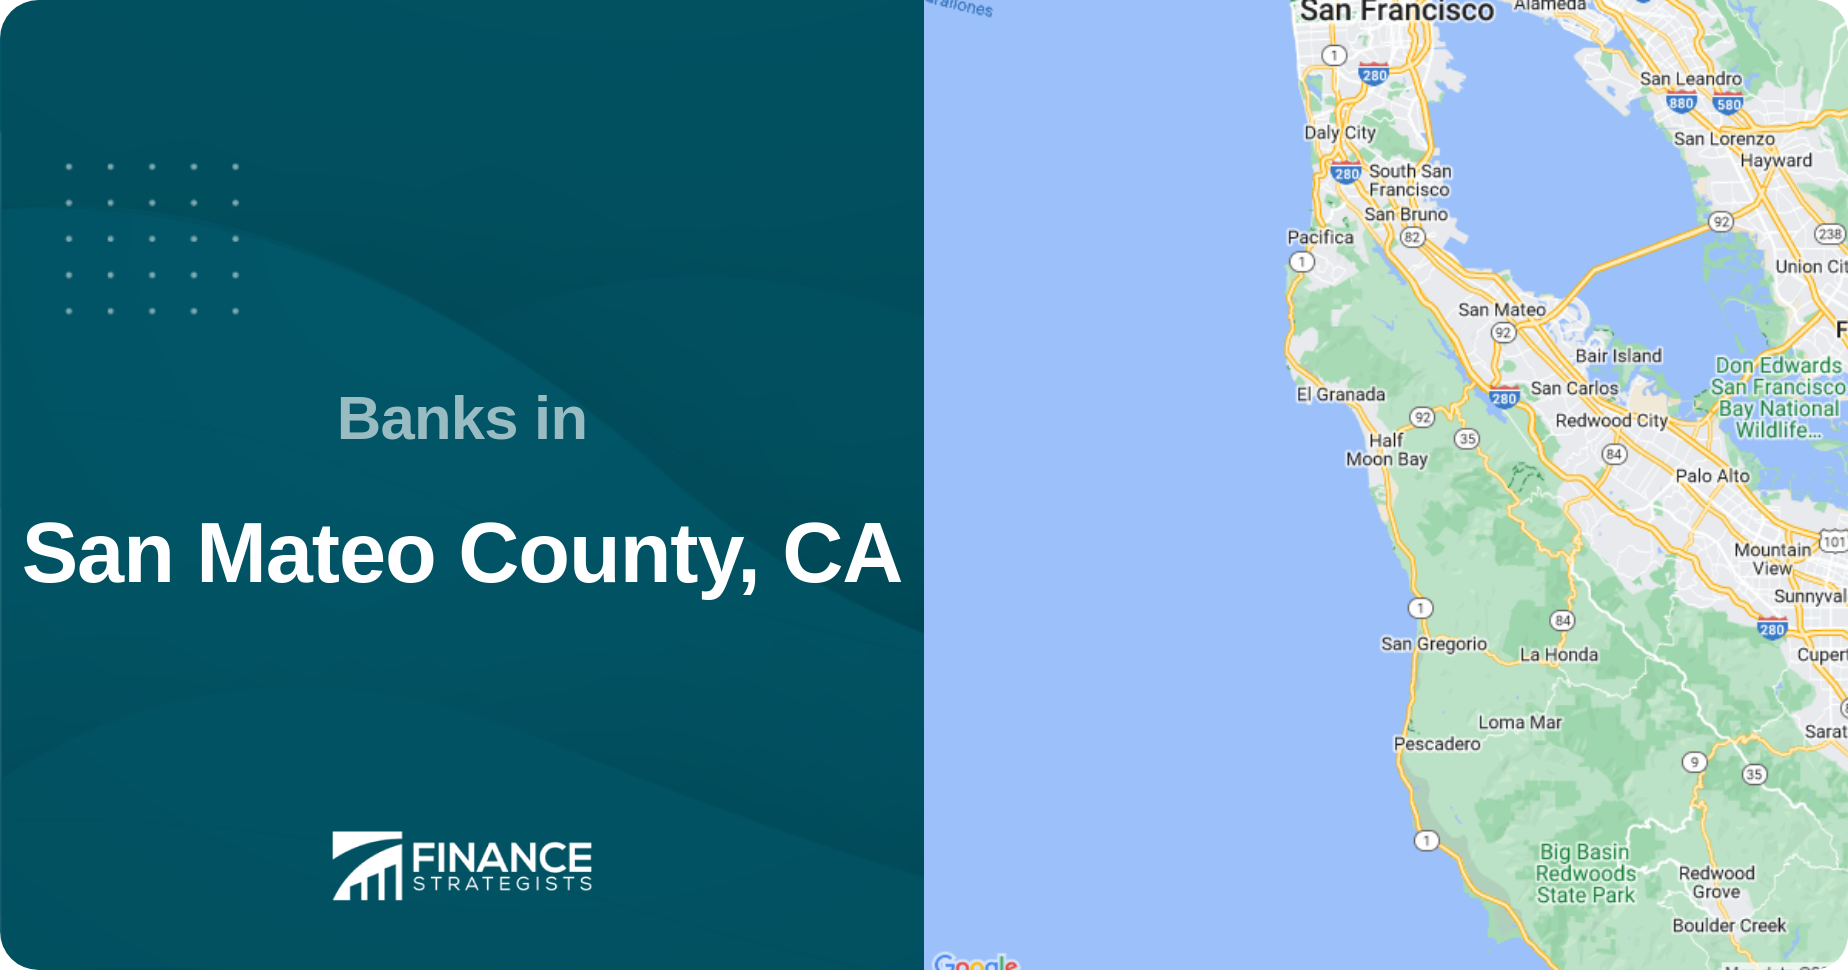 Banks in San Mateo County, CA